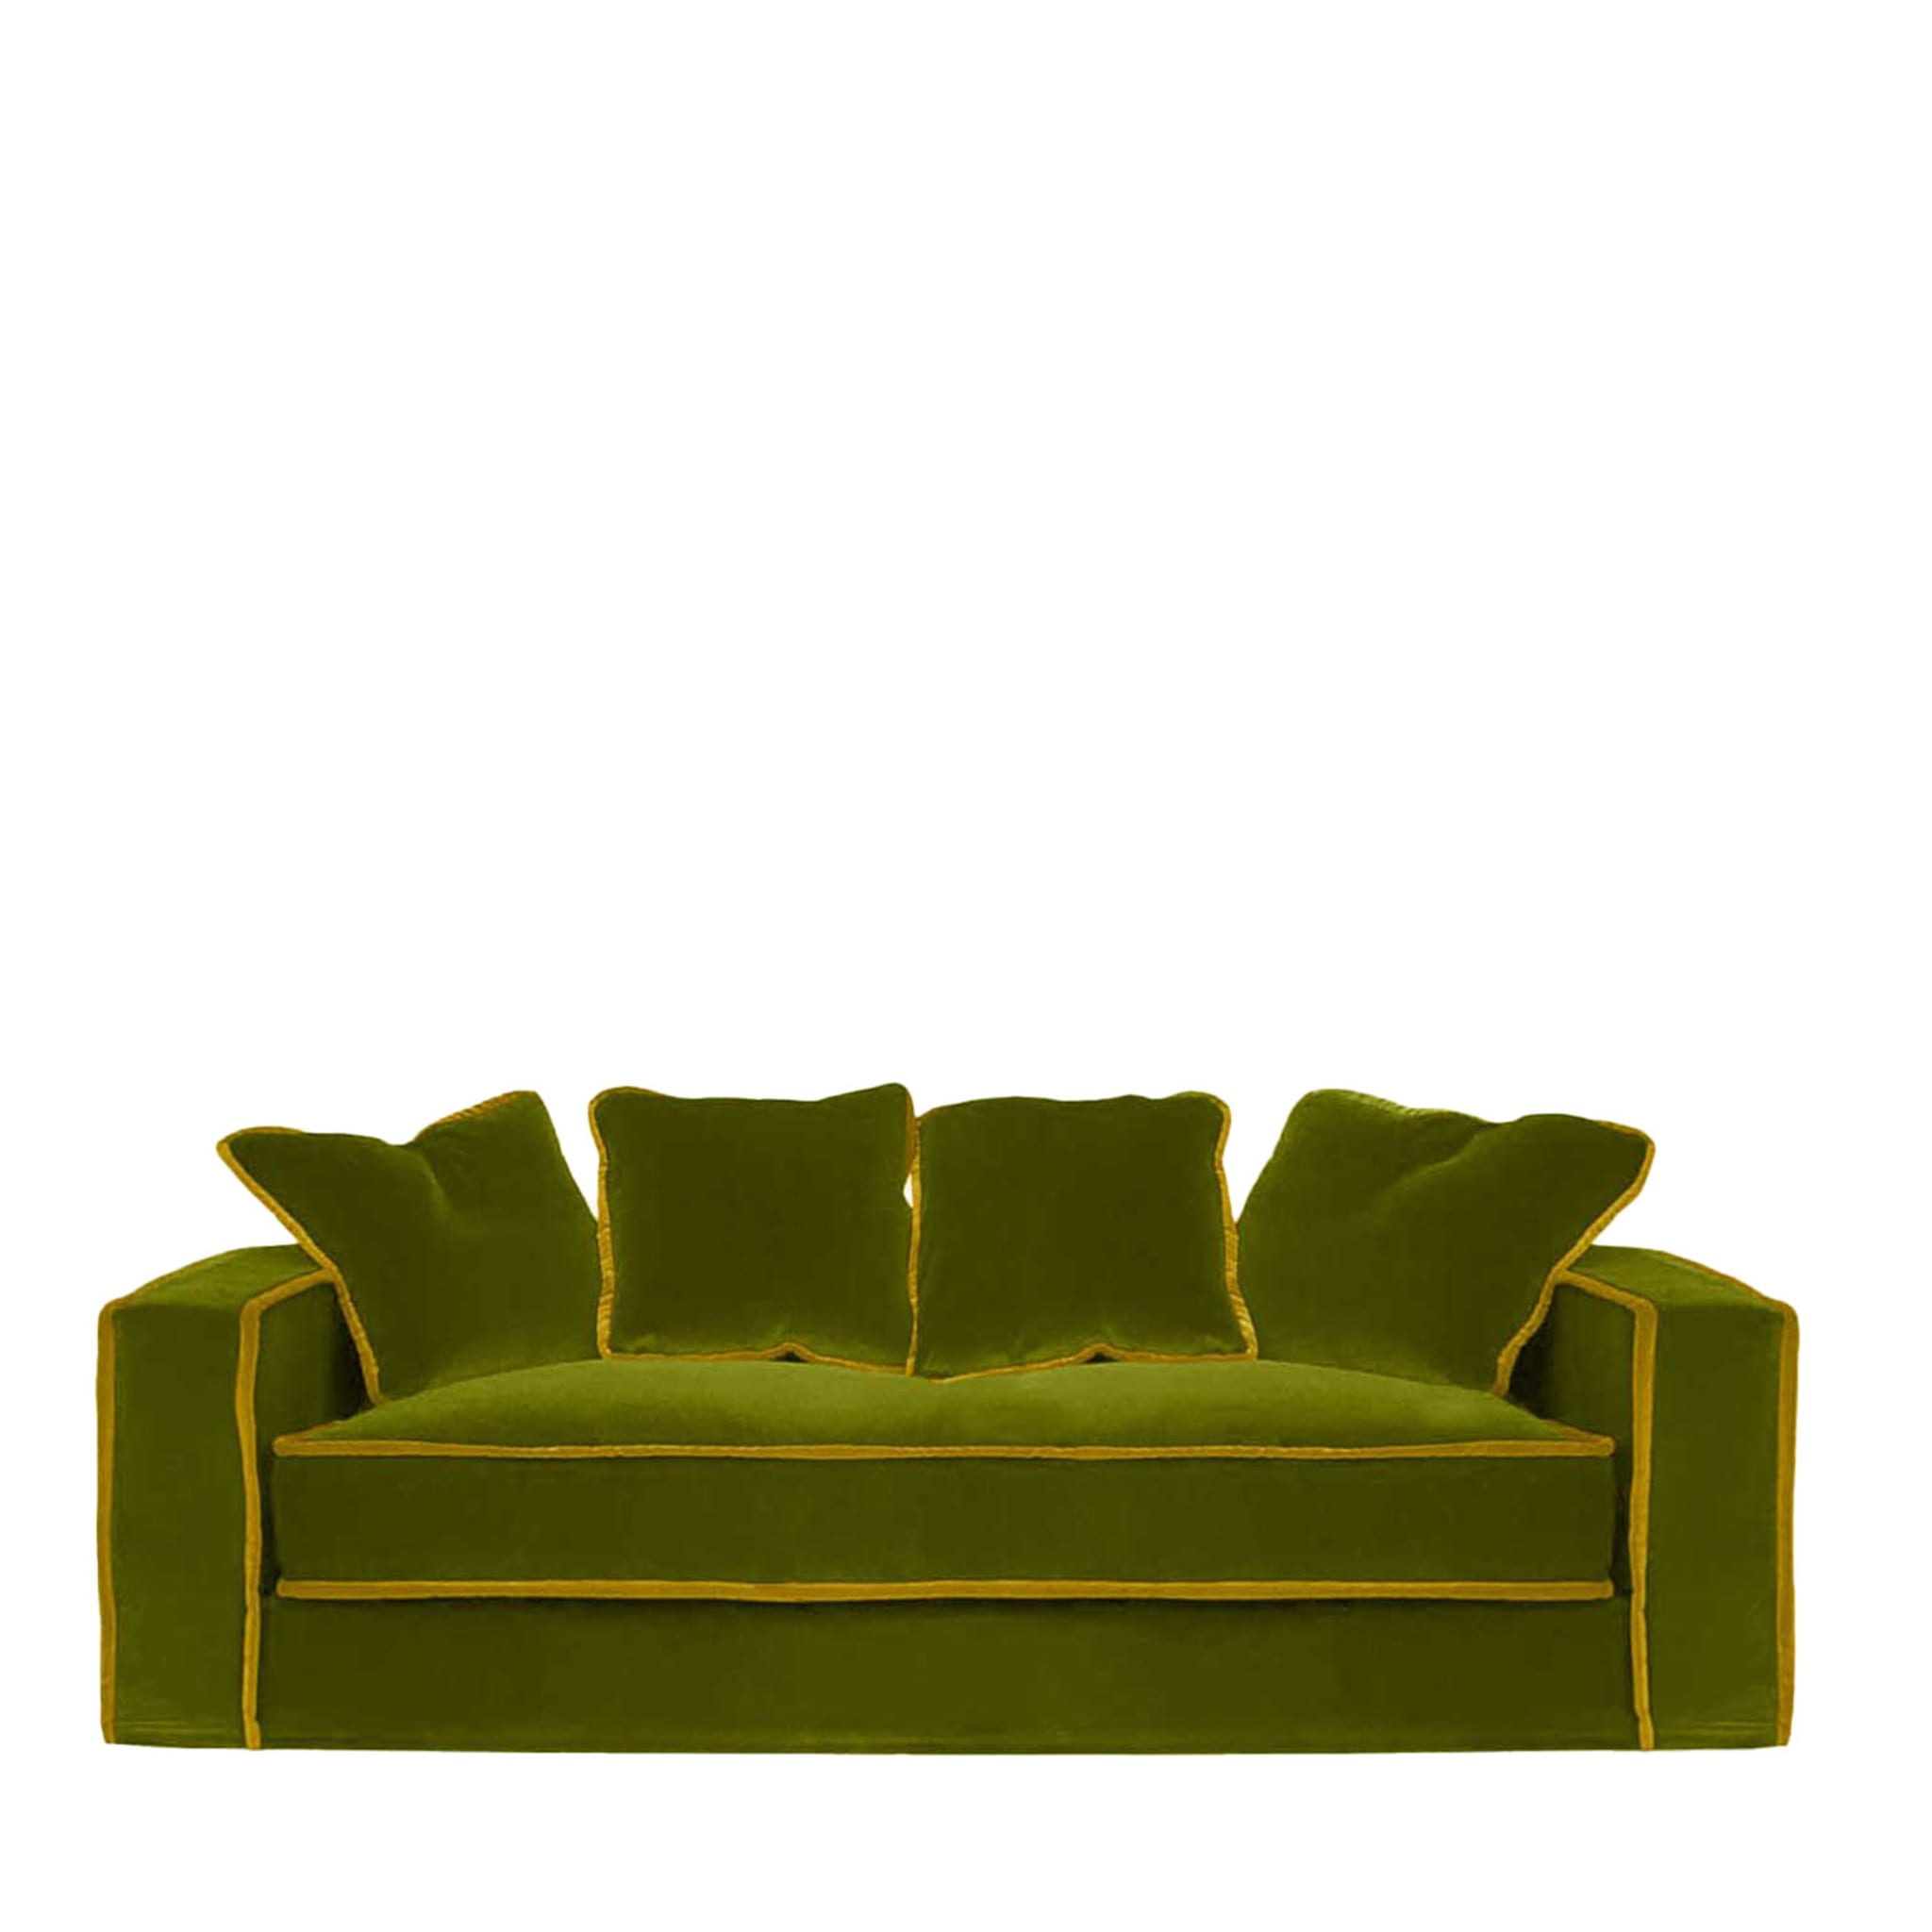 Rafaella Green & Gold Velvet 2 Seater Sofa - Main view